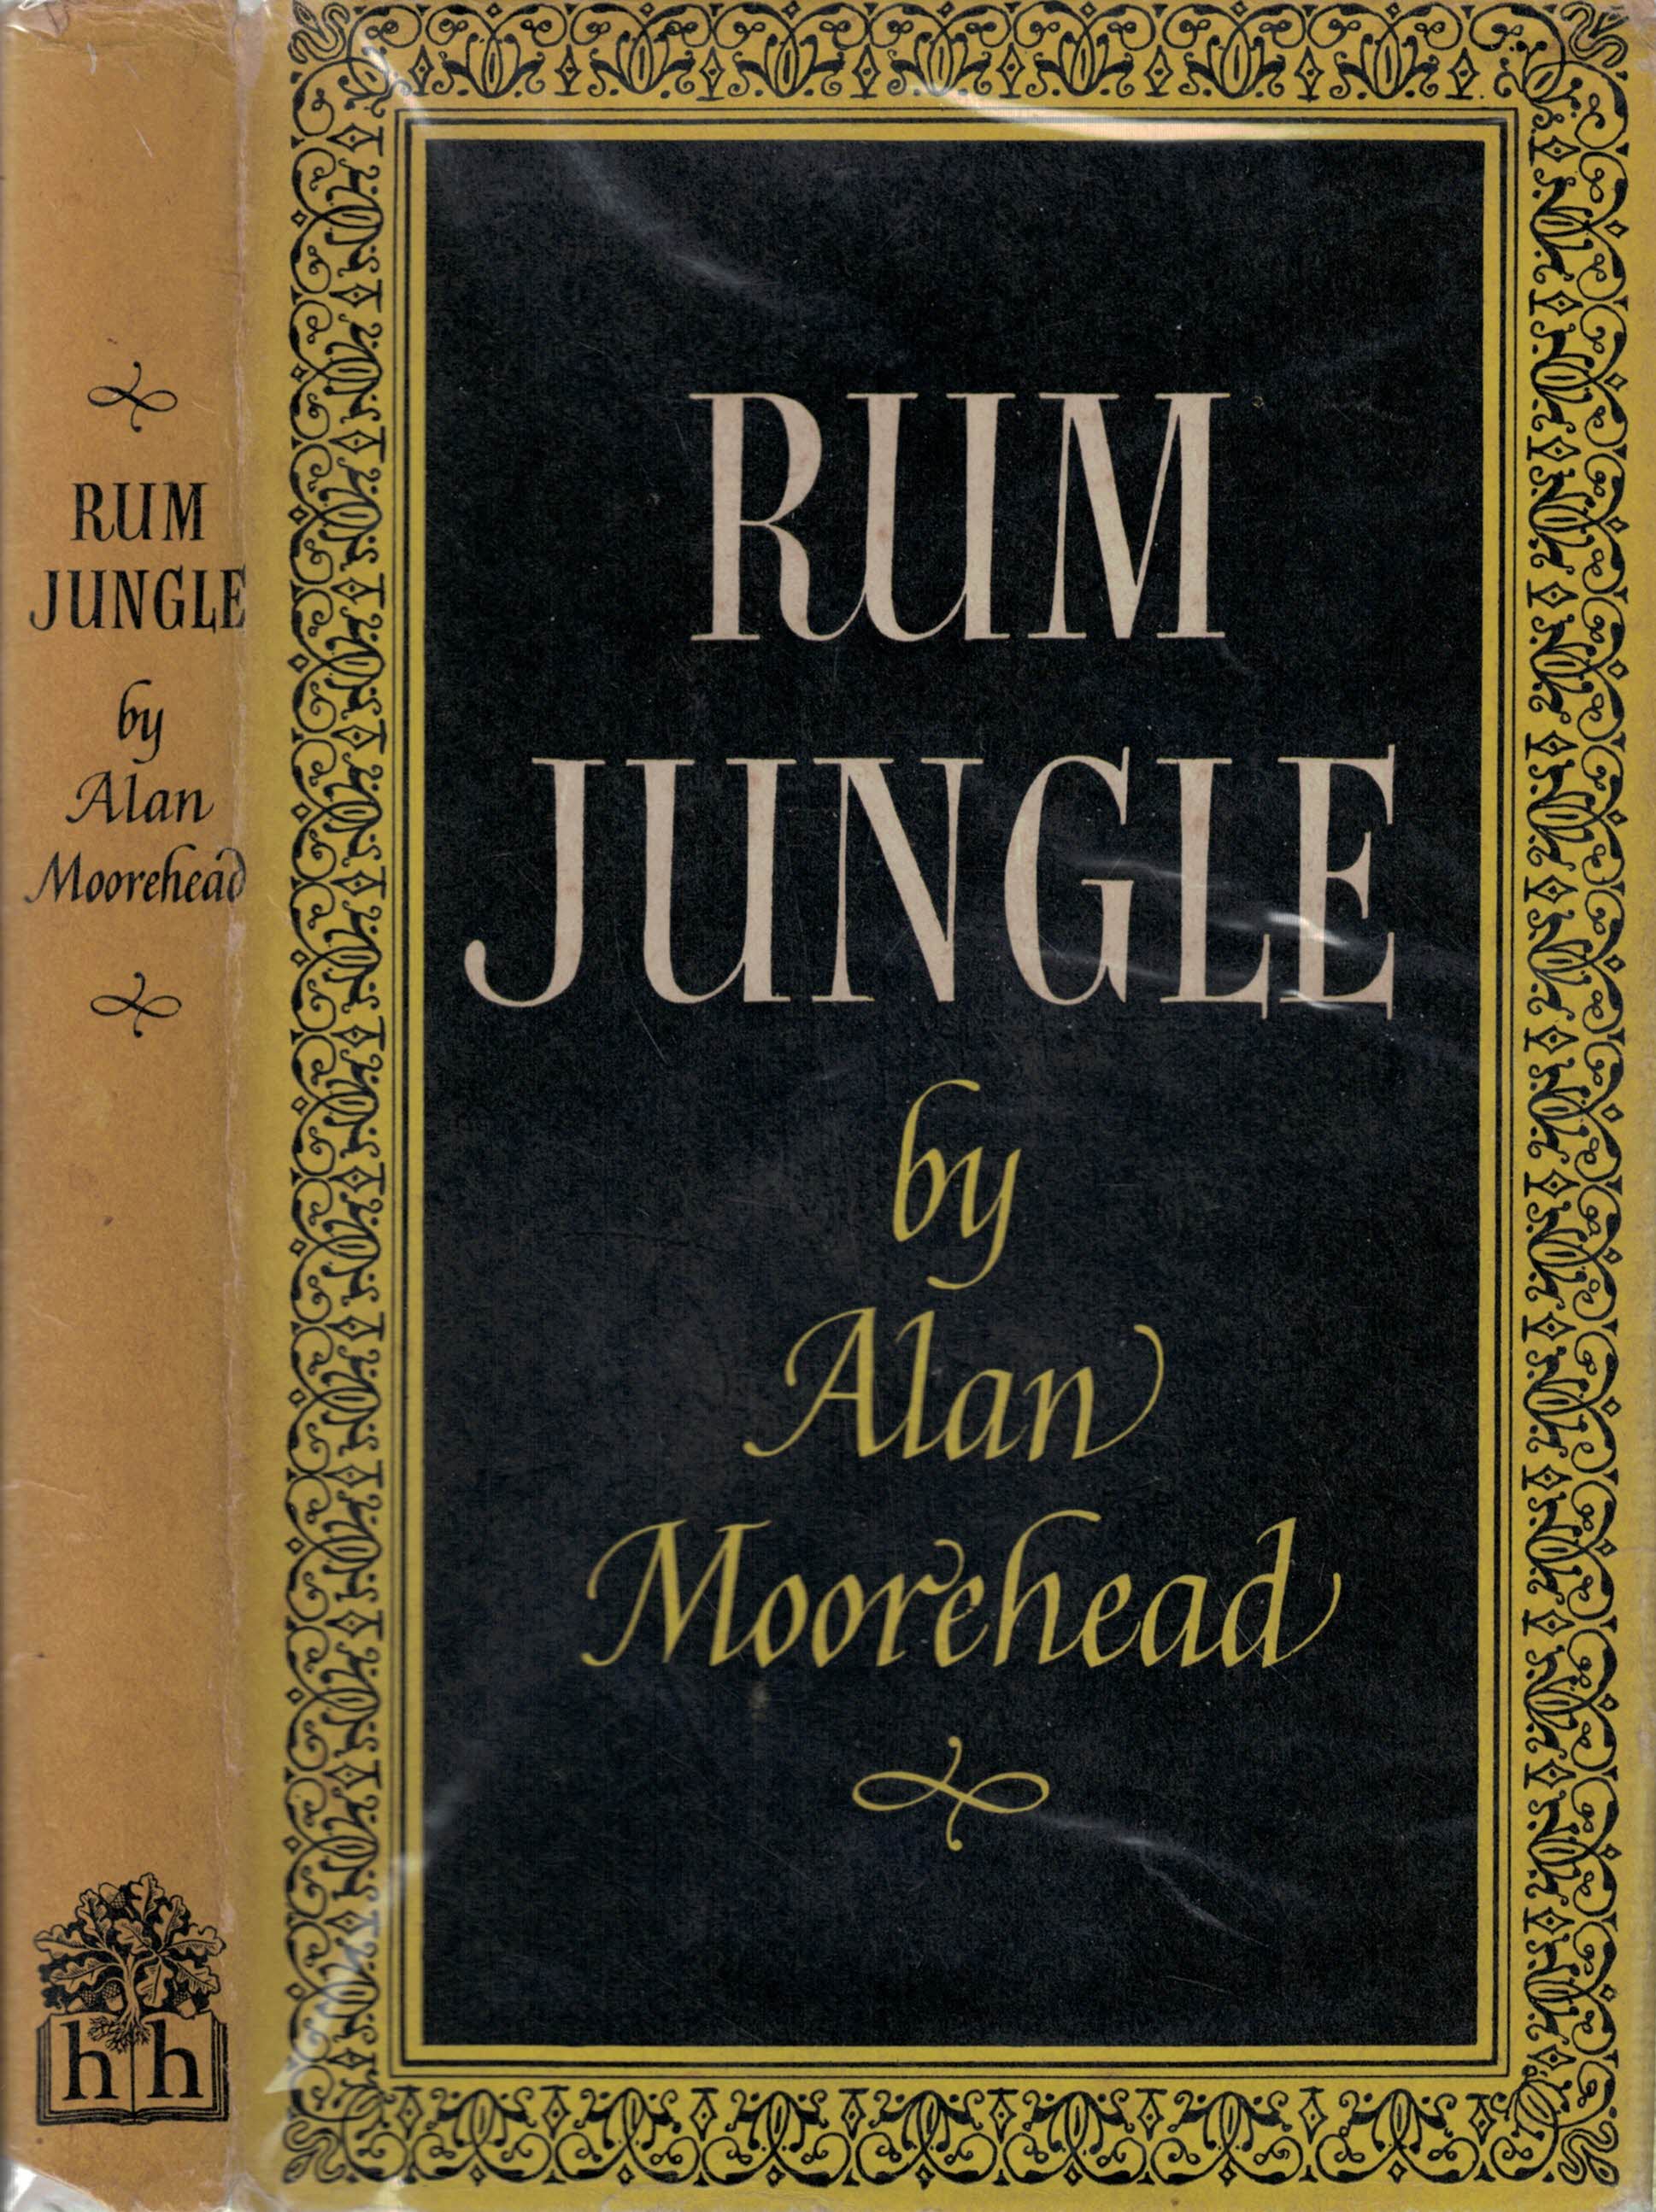 MOOREHEAD, ALAN - Rum Jungle